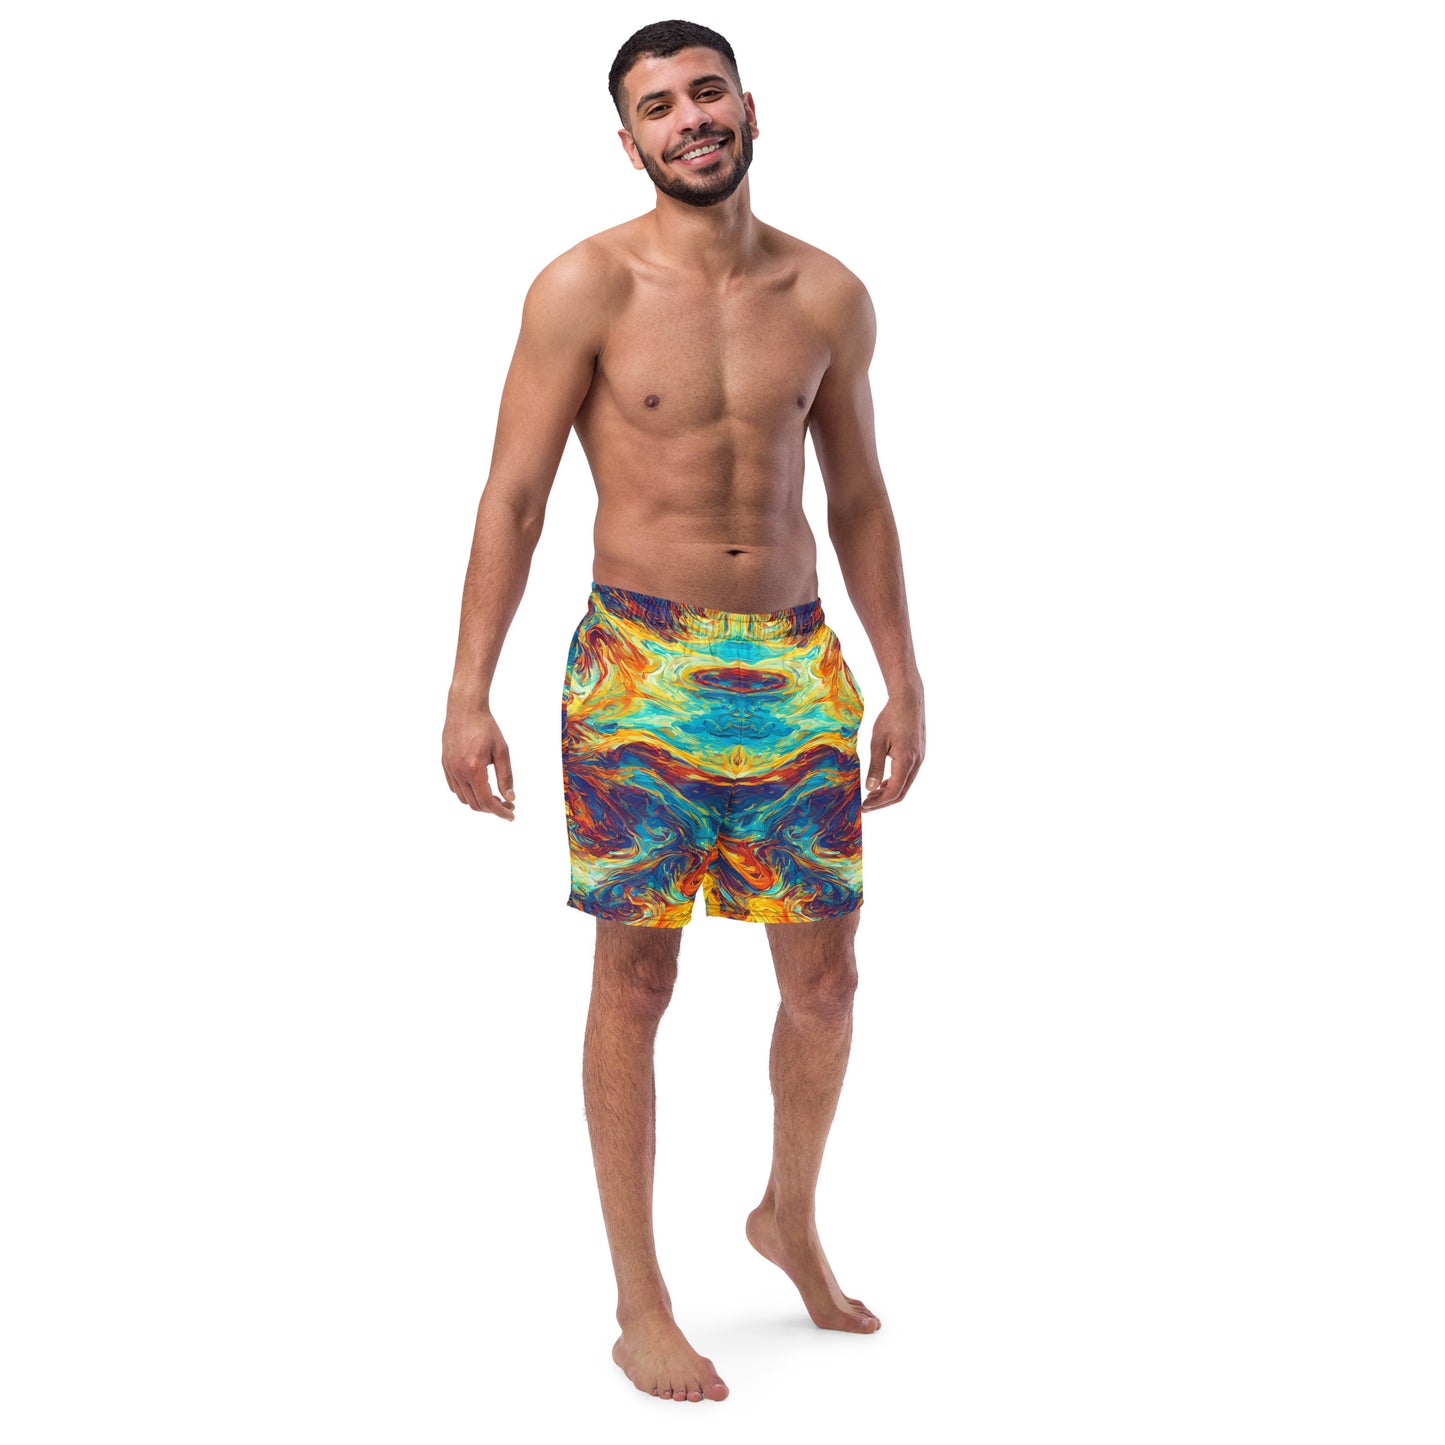 Flaming Confusion : Men's swim trunks